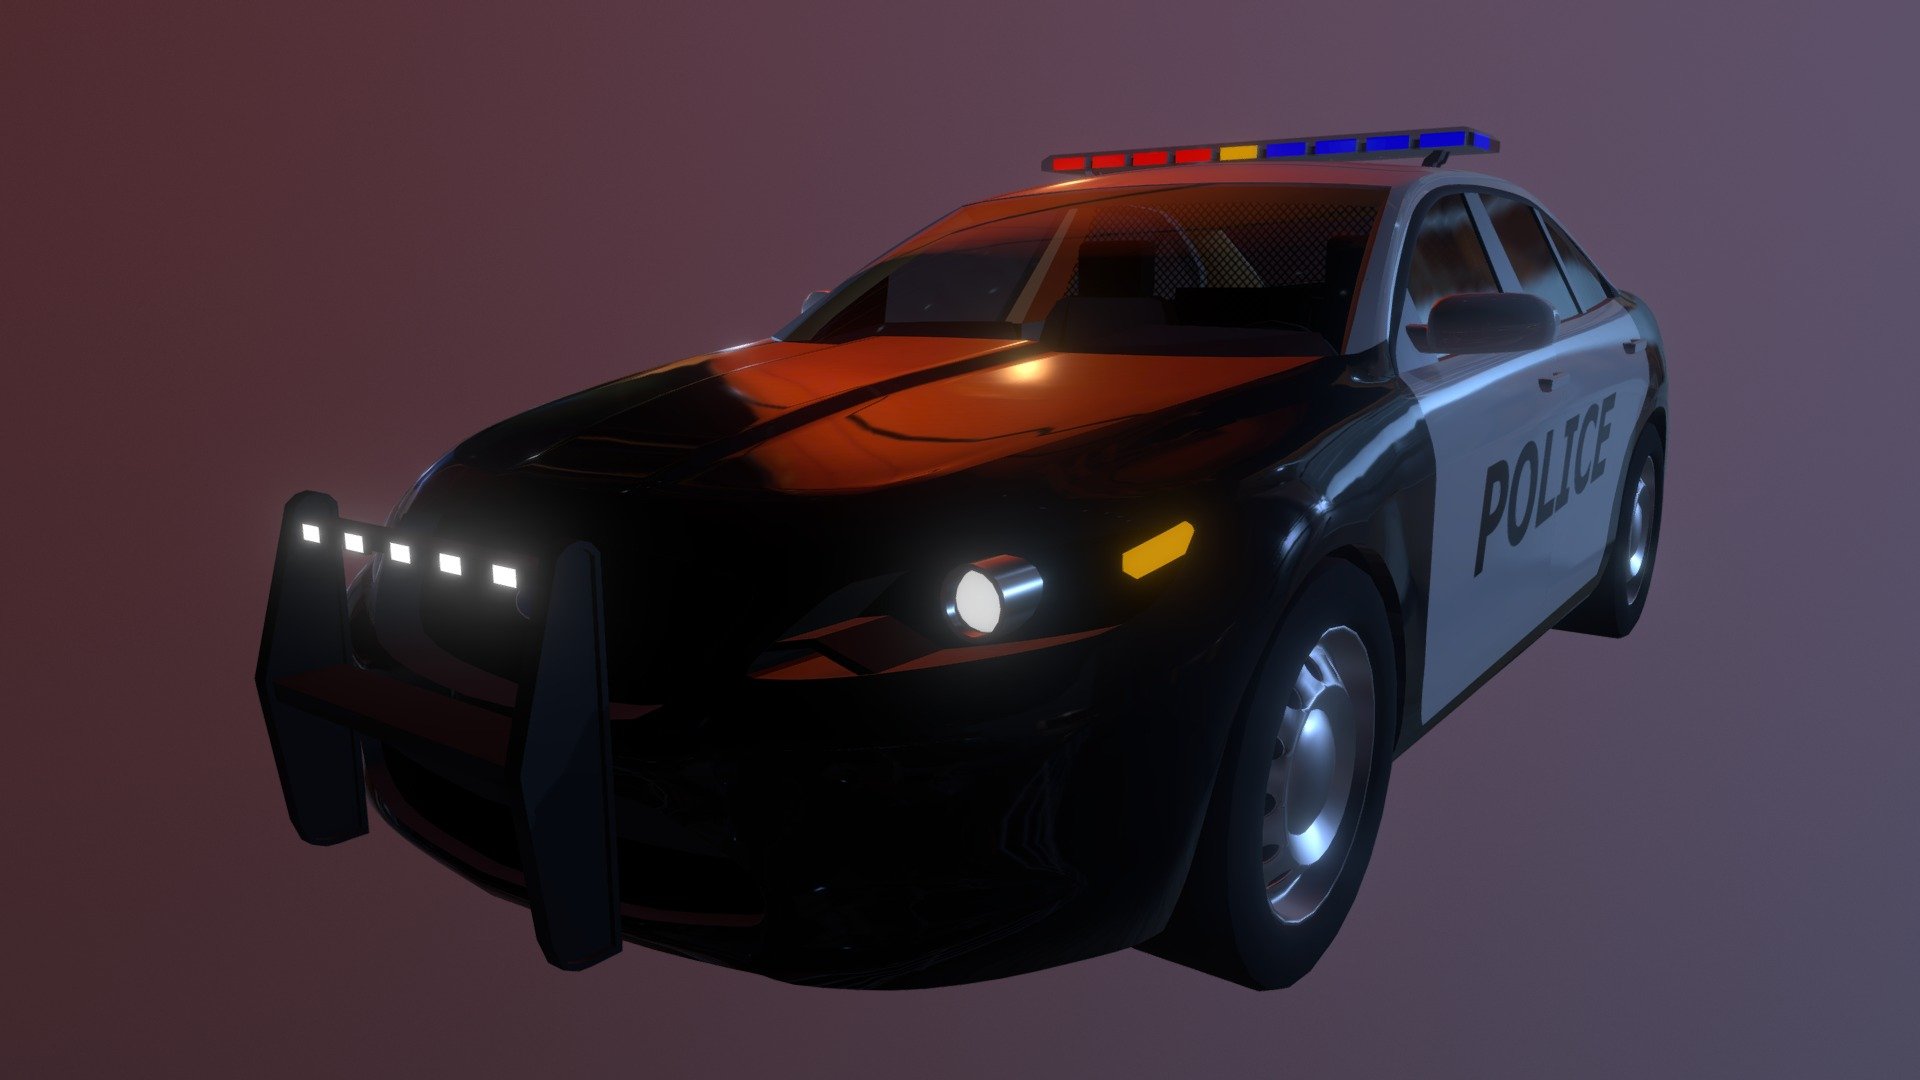  Police  Car  3D  model  by Delwyn dappiah 90ef1d3 